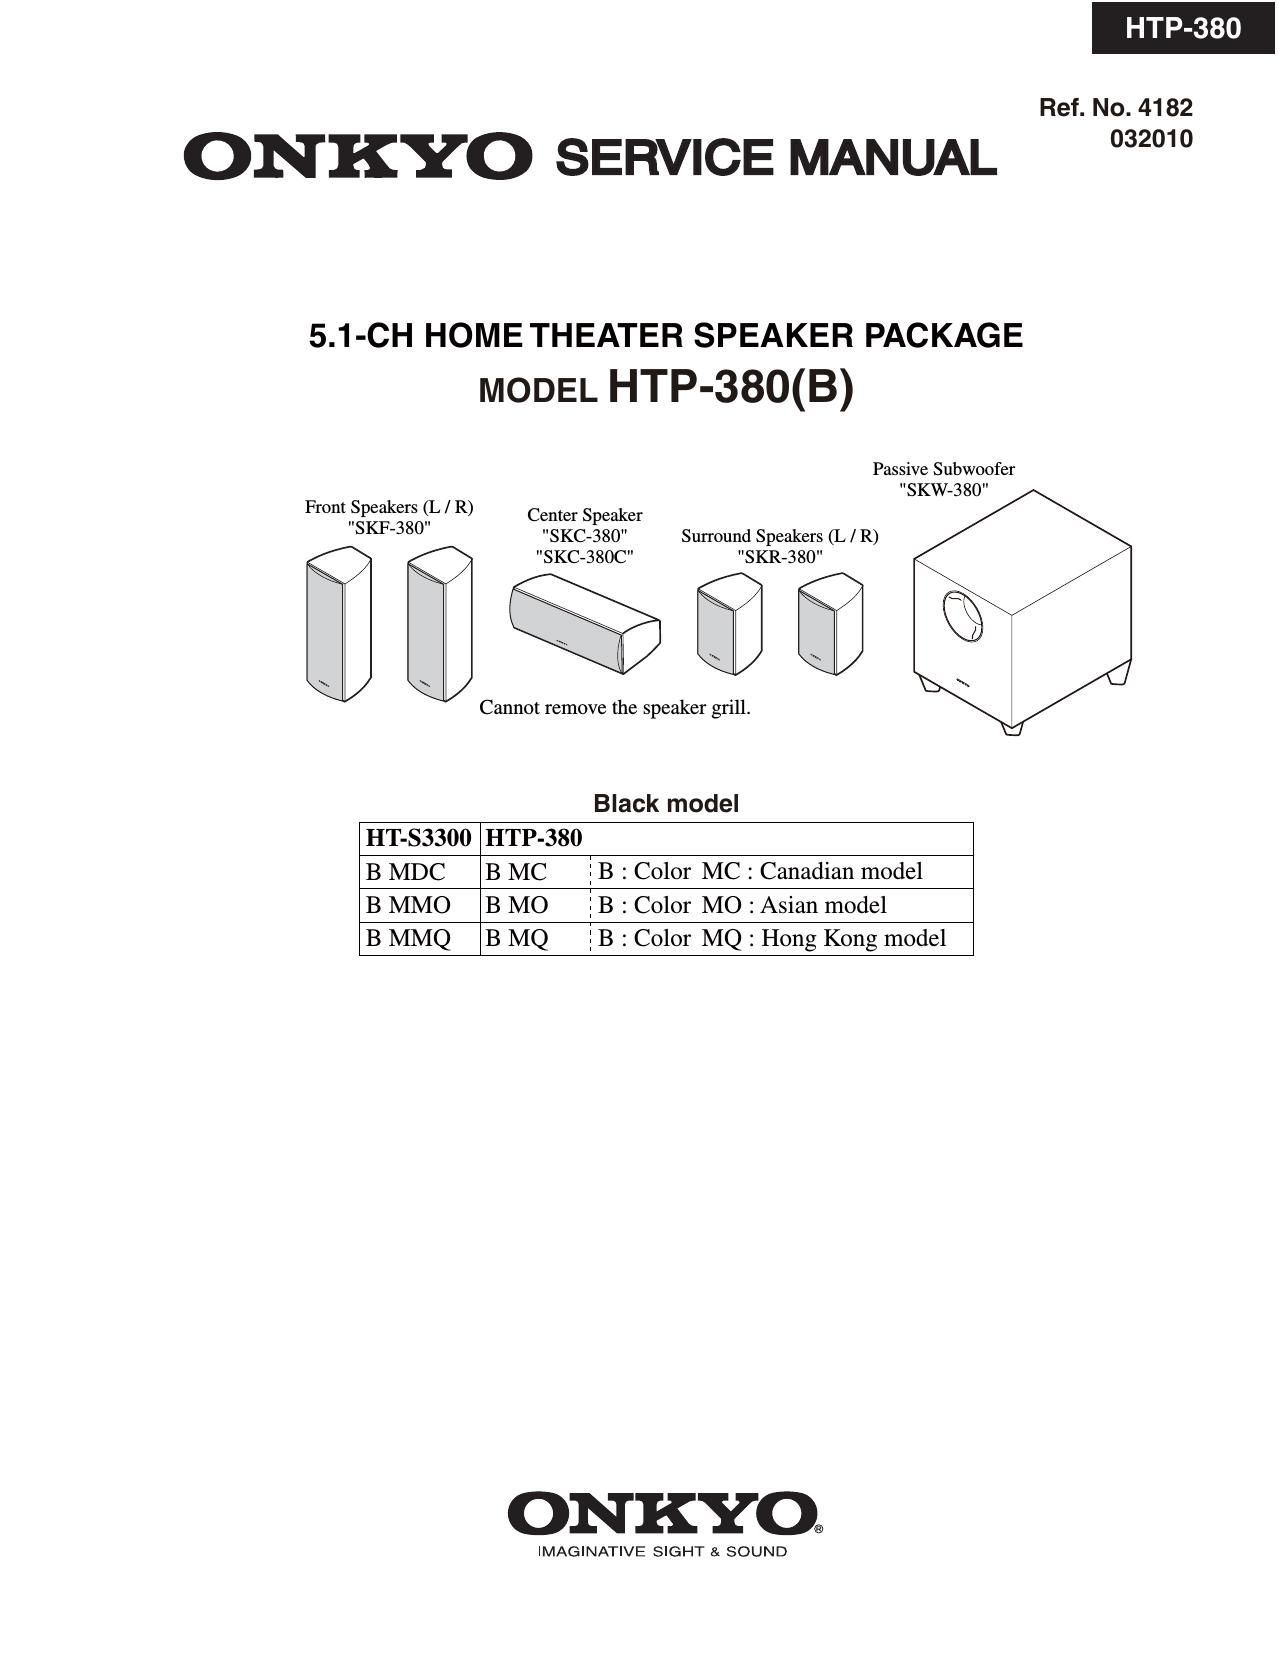 Onkyo HTP 380 Service Manual